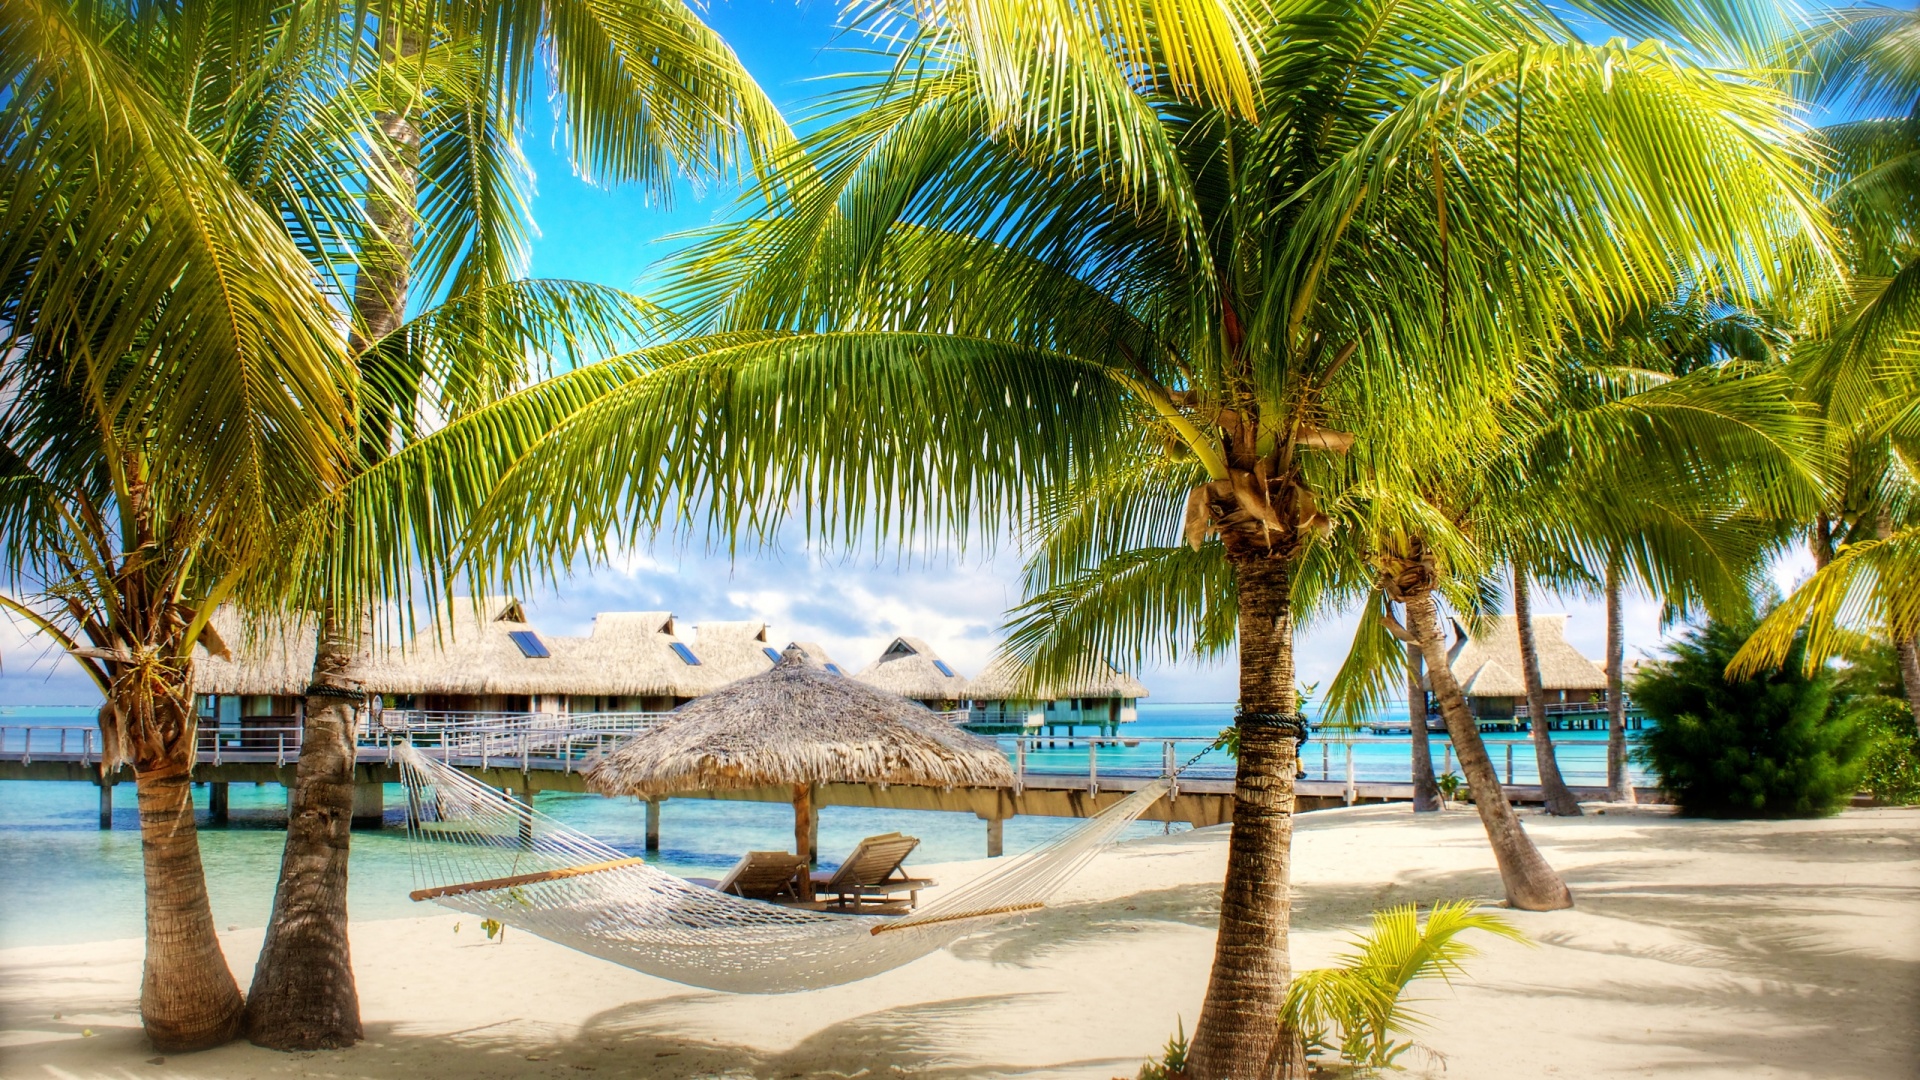 photography, holiday, beach, hammock, hut, palm tree, resort, tree, tropical QHD